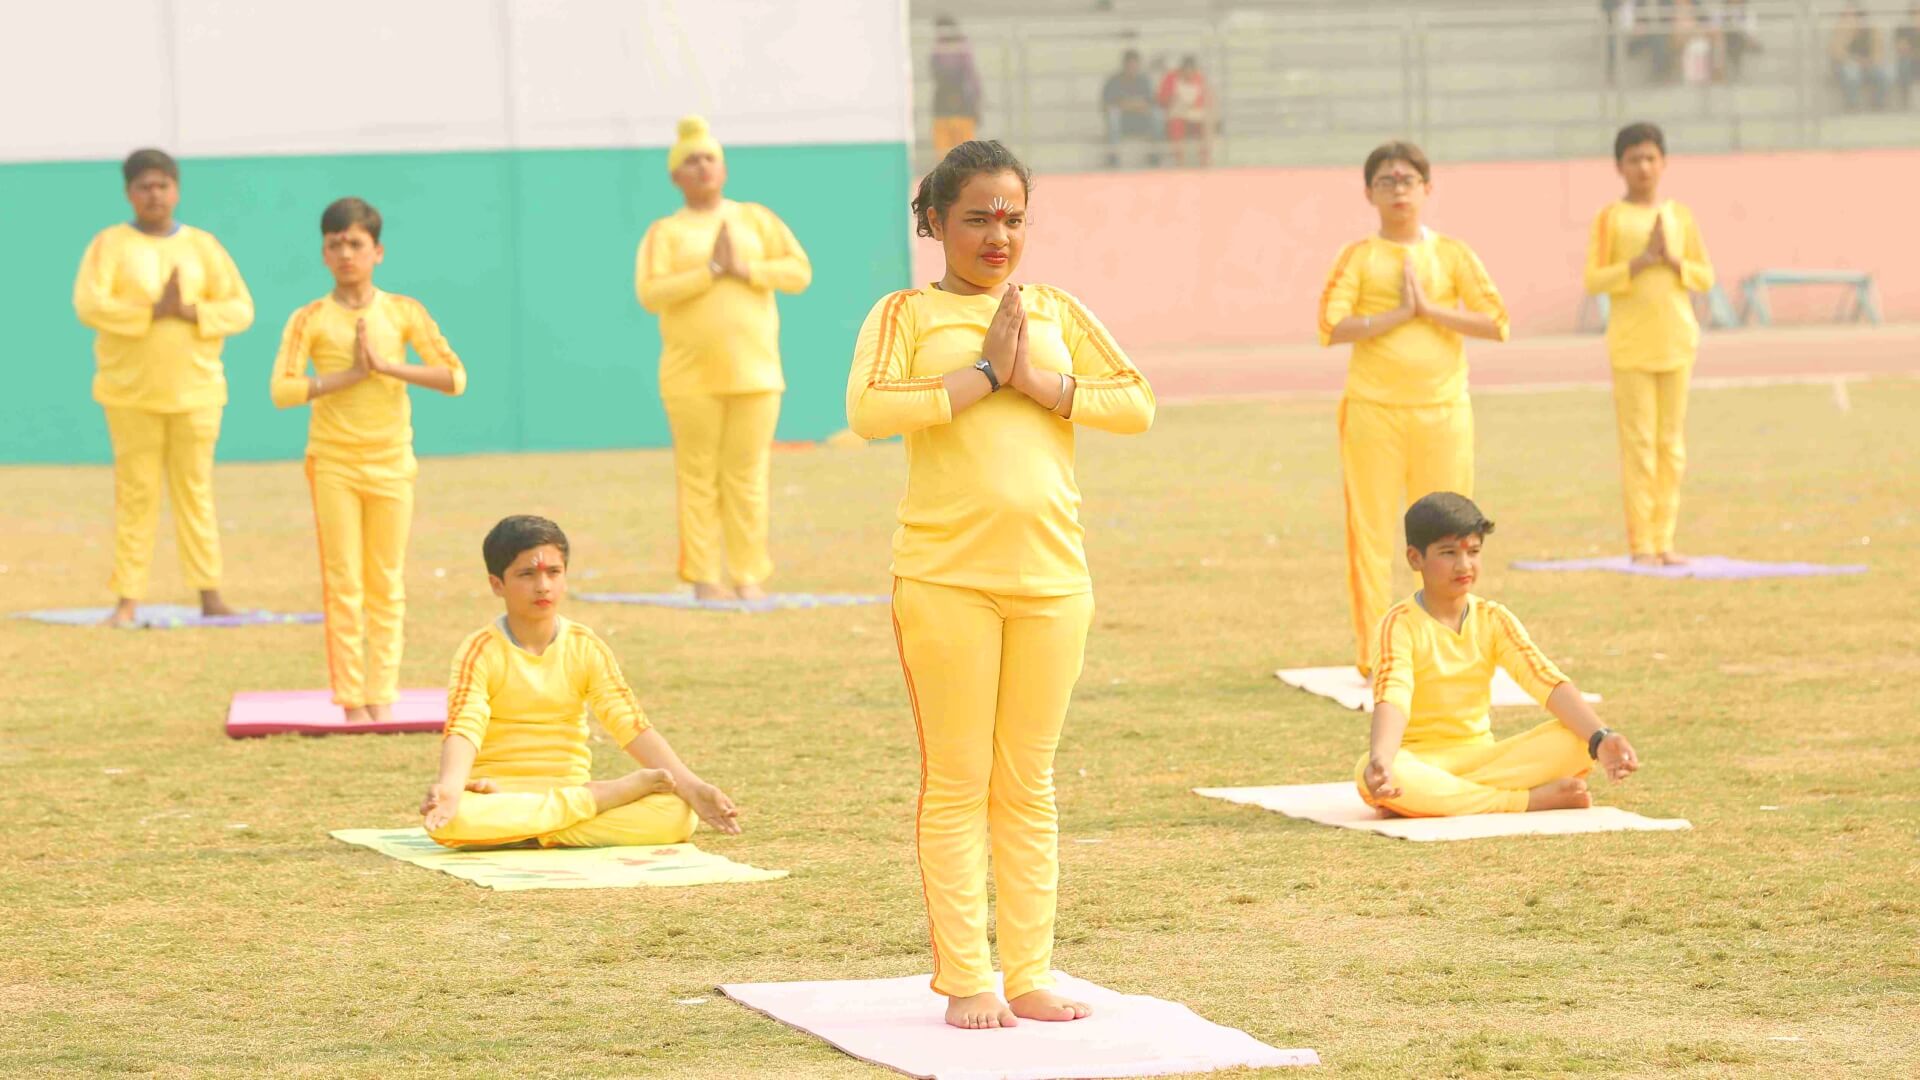 Group Yoga Performance at Richmondd Global School Delhi